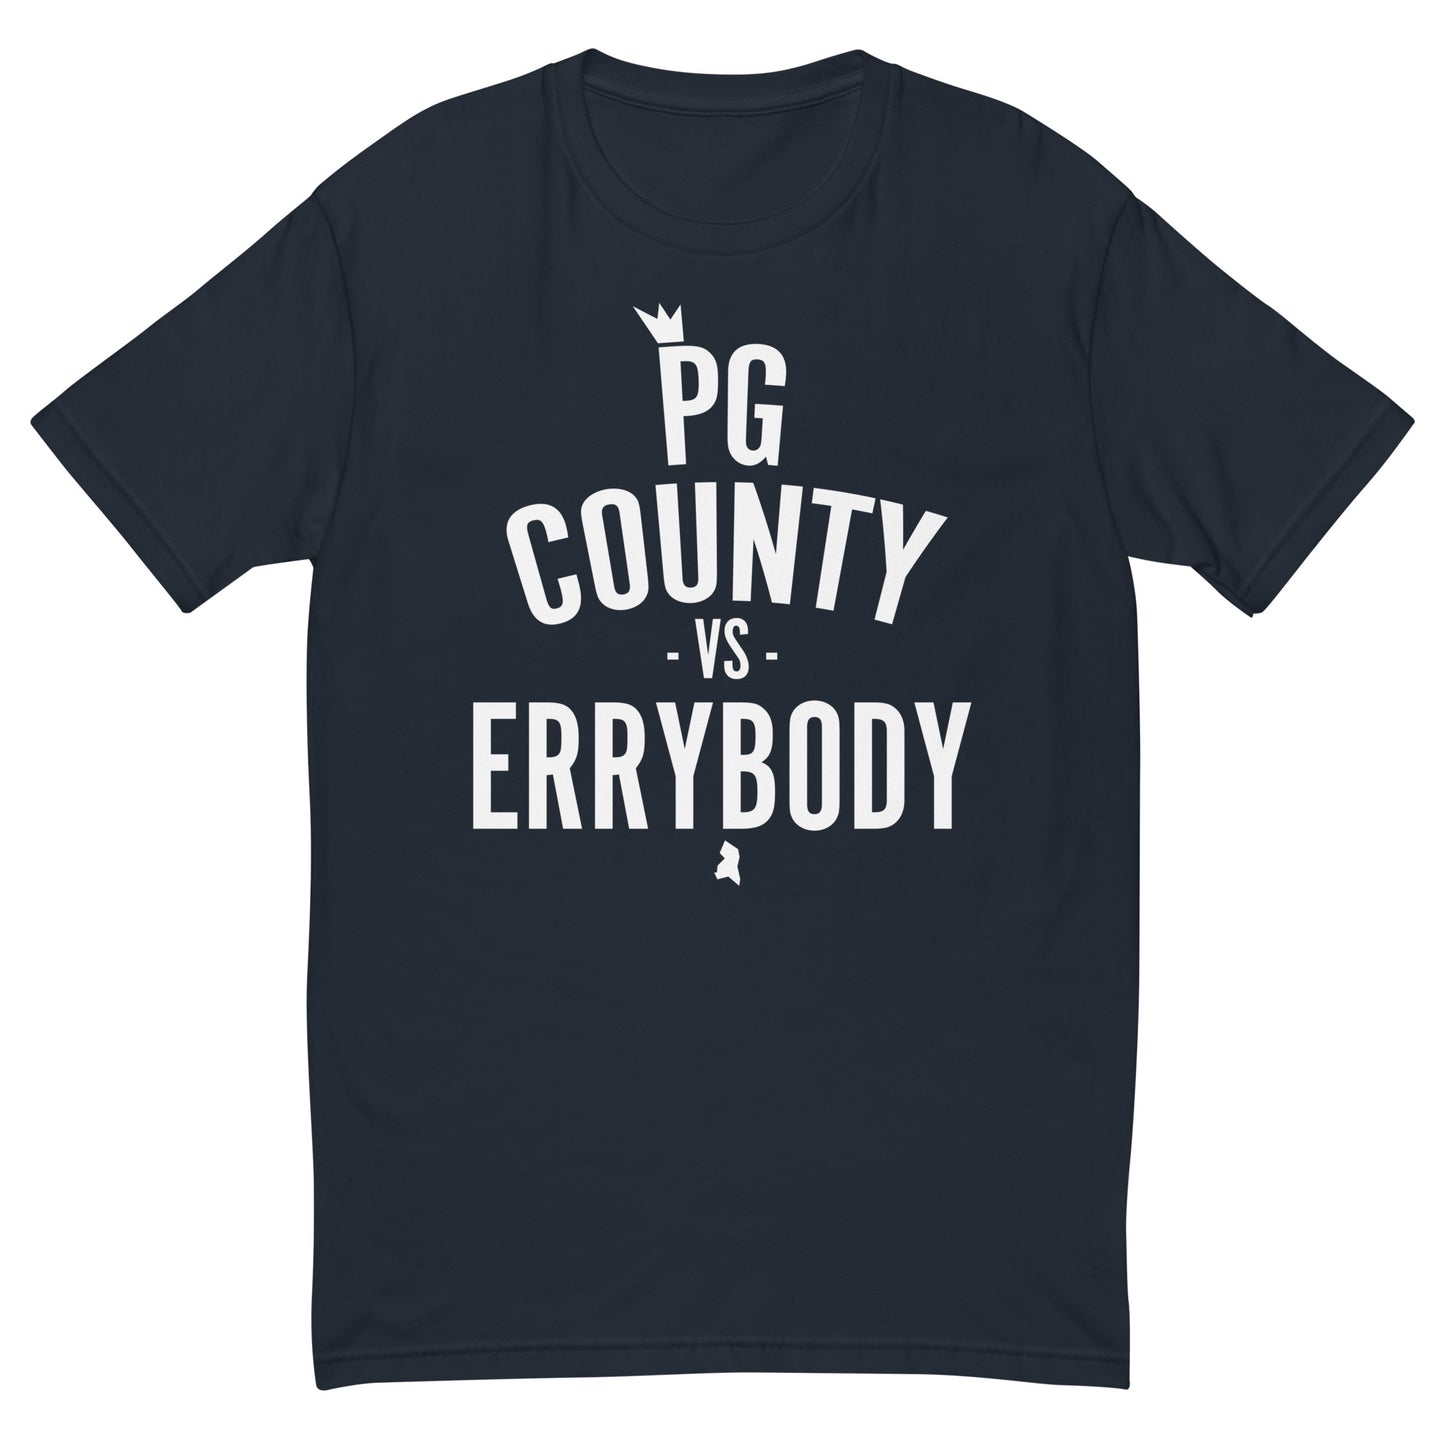 PG County vs ERRYBODY Unisex Tee